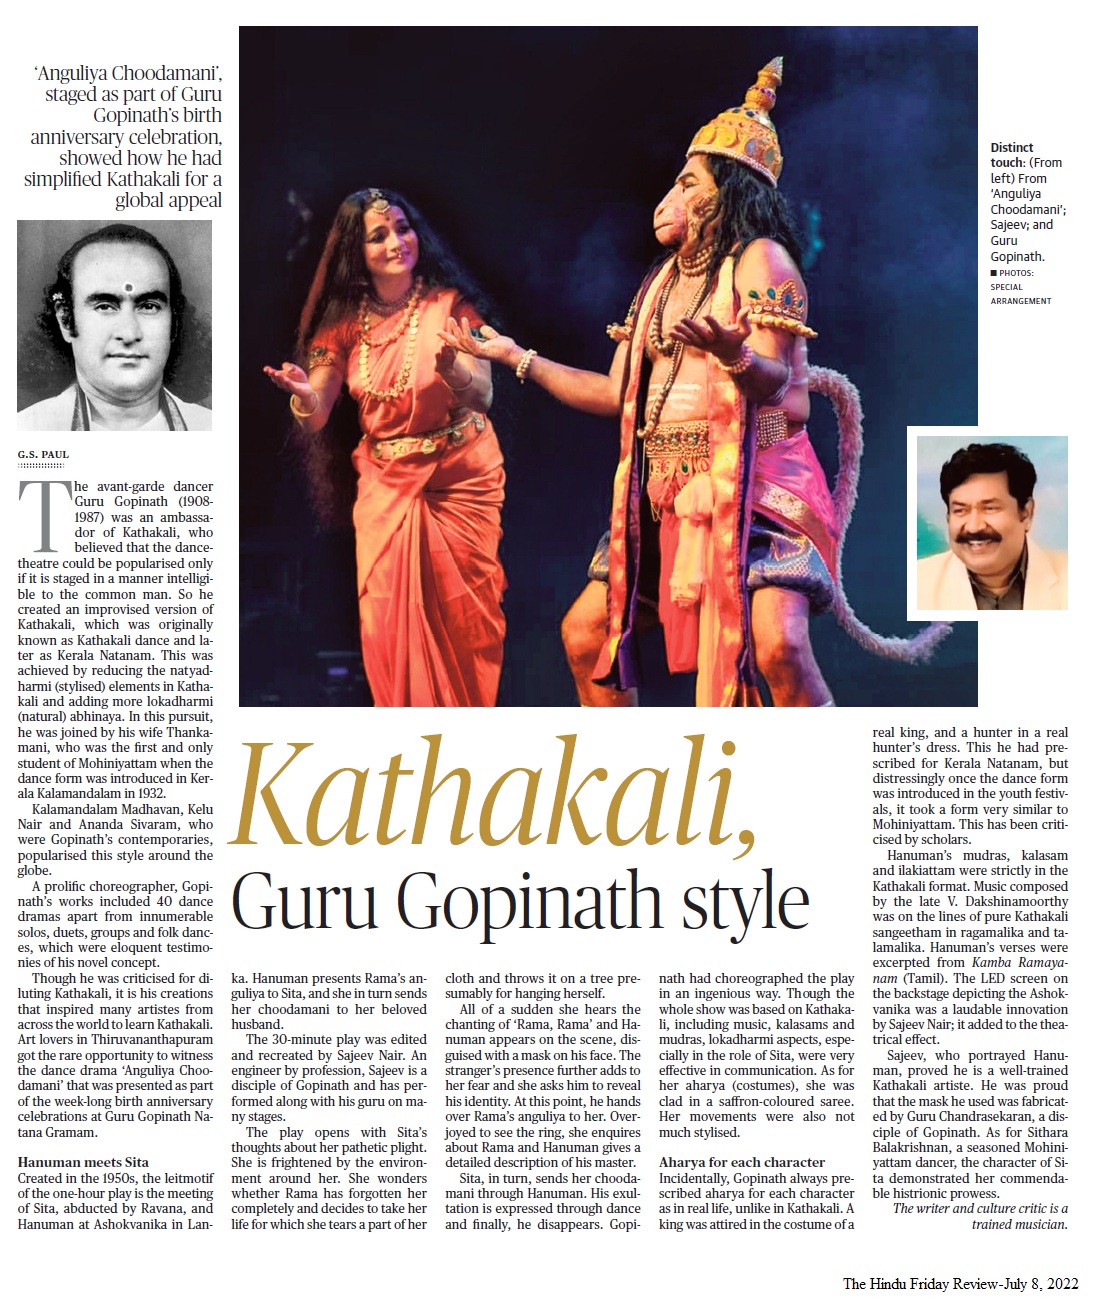 Kathakali, Guru Gopinath style - GS Paul